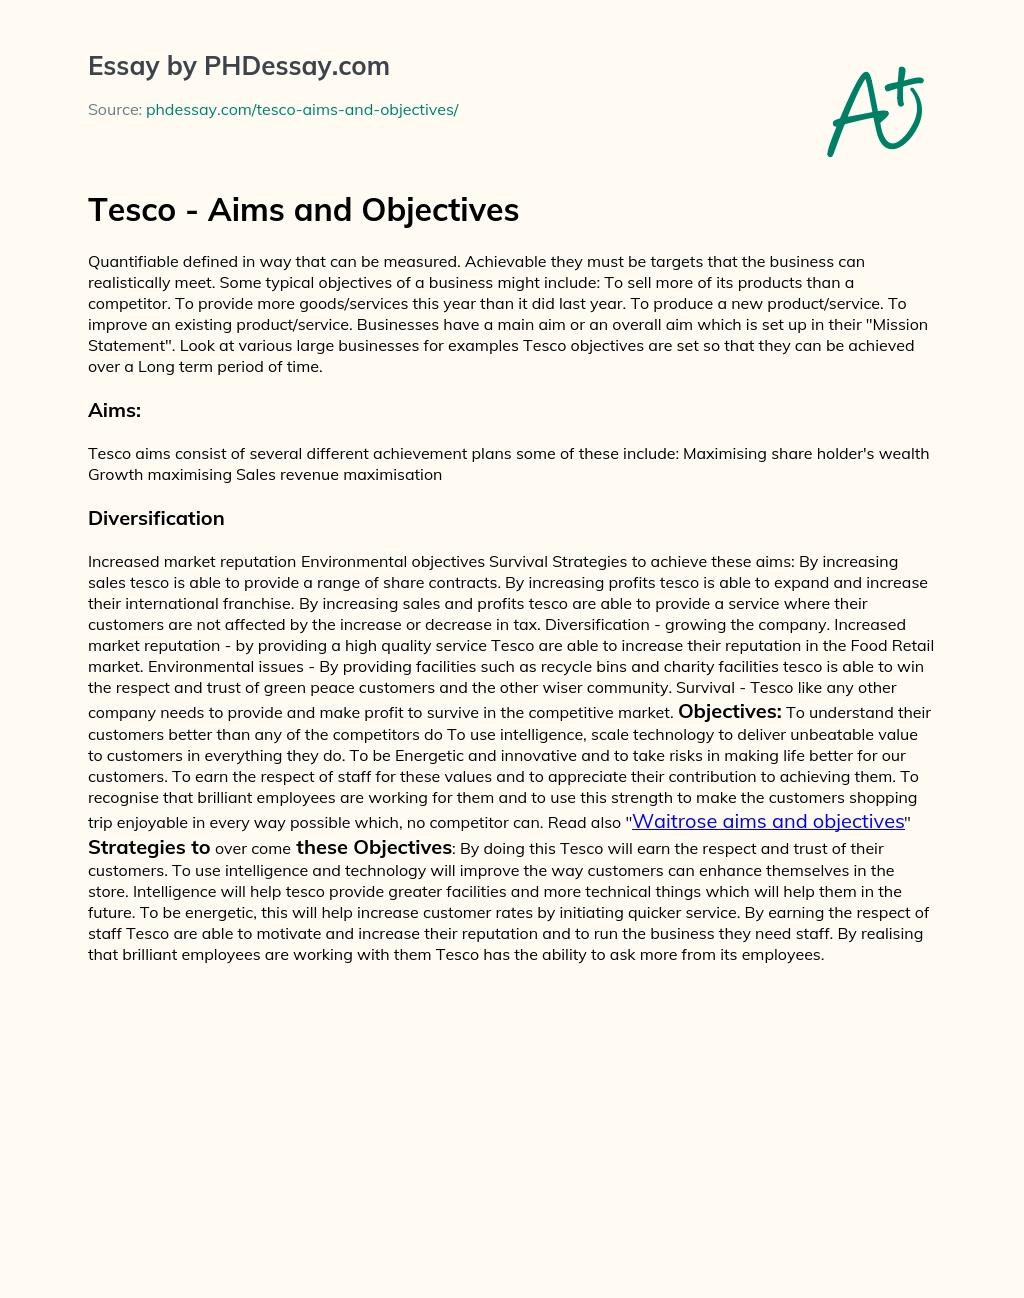 Tesco – Aims and Objectives essay